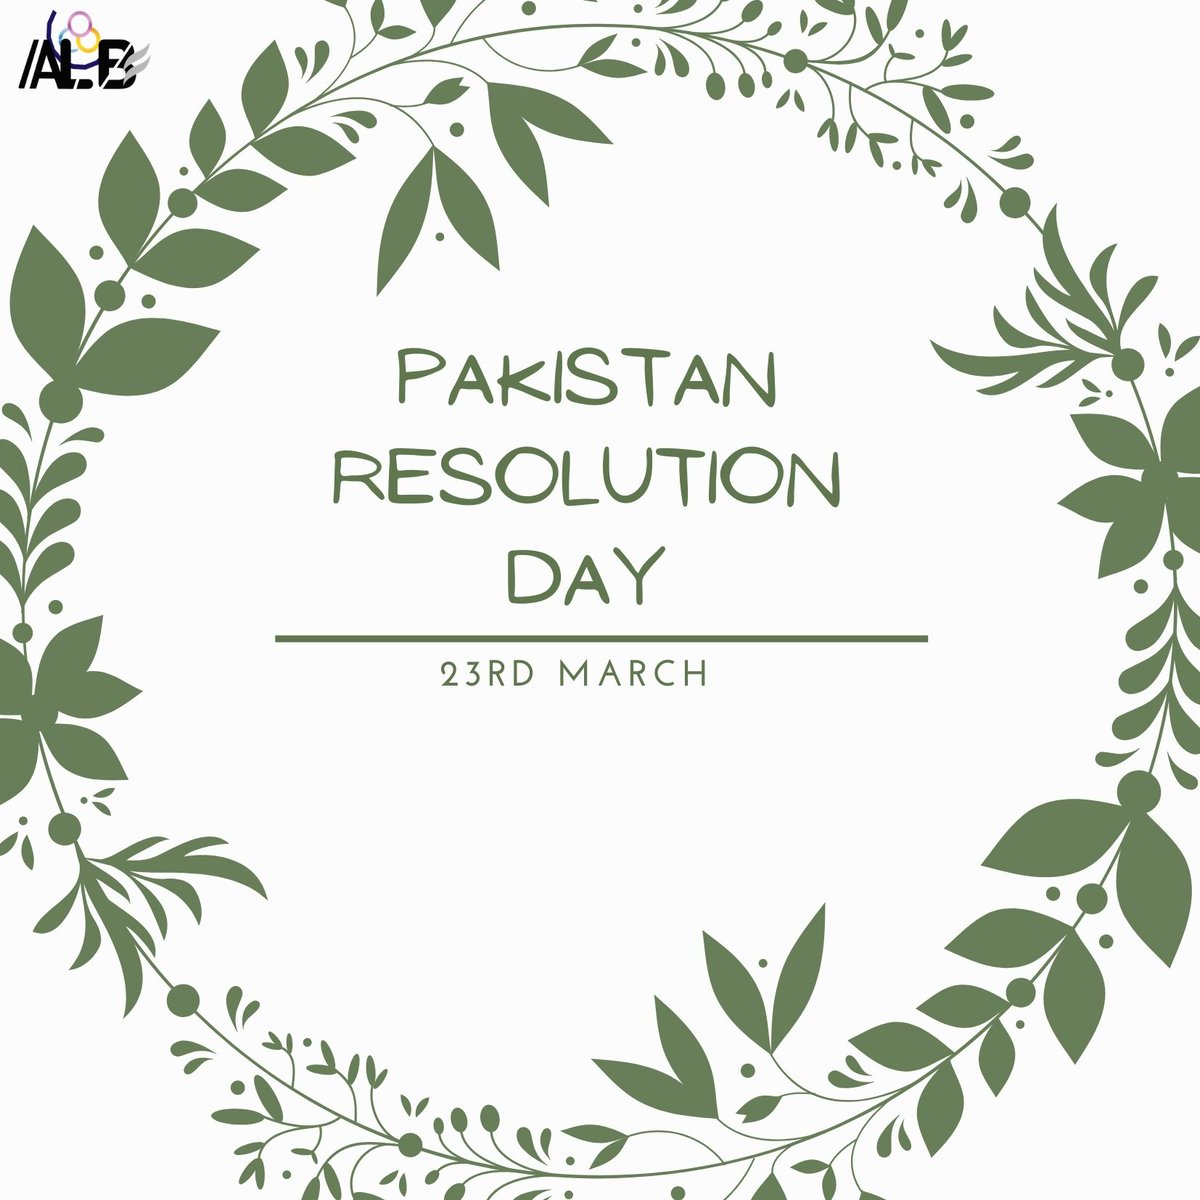 RESOLUTION DAY.
albtechs.com
#marketing2020 #digitalmarketing #webdesign #socialmedia #development #seo #sem #soleproprietorship #graphicdesign #animationvideo #contentcreation #PakistanResolutionDay